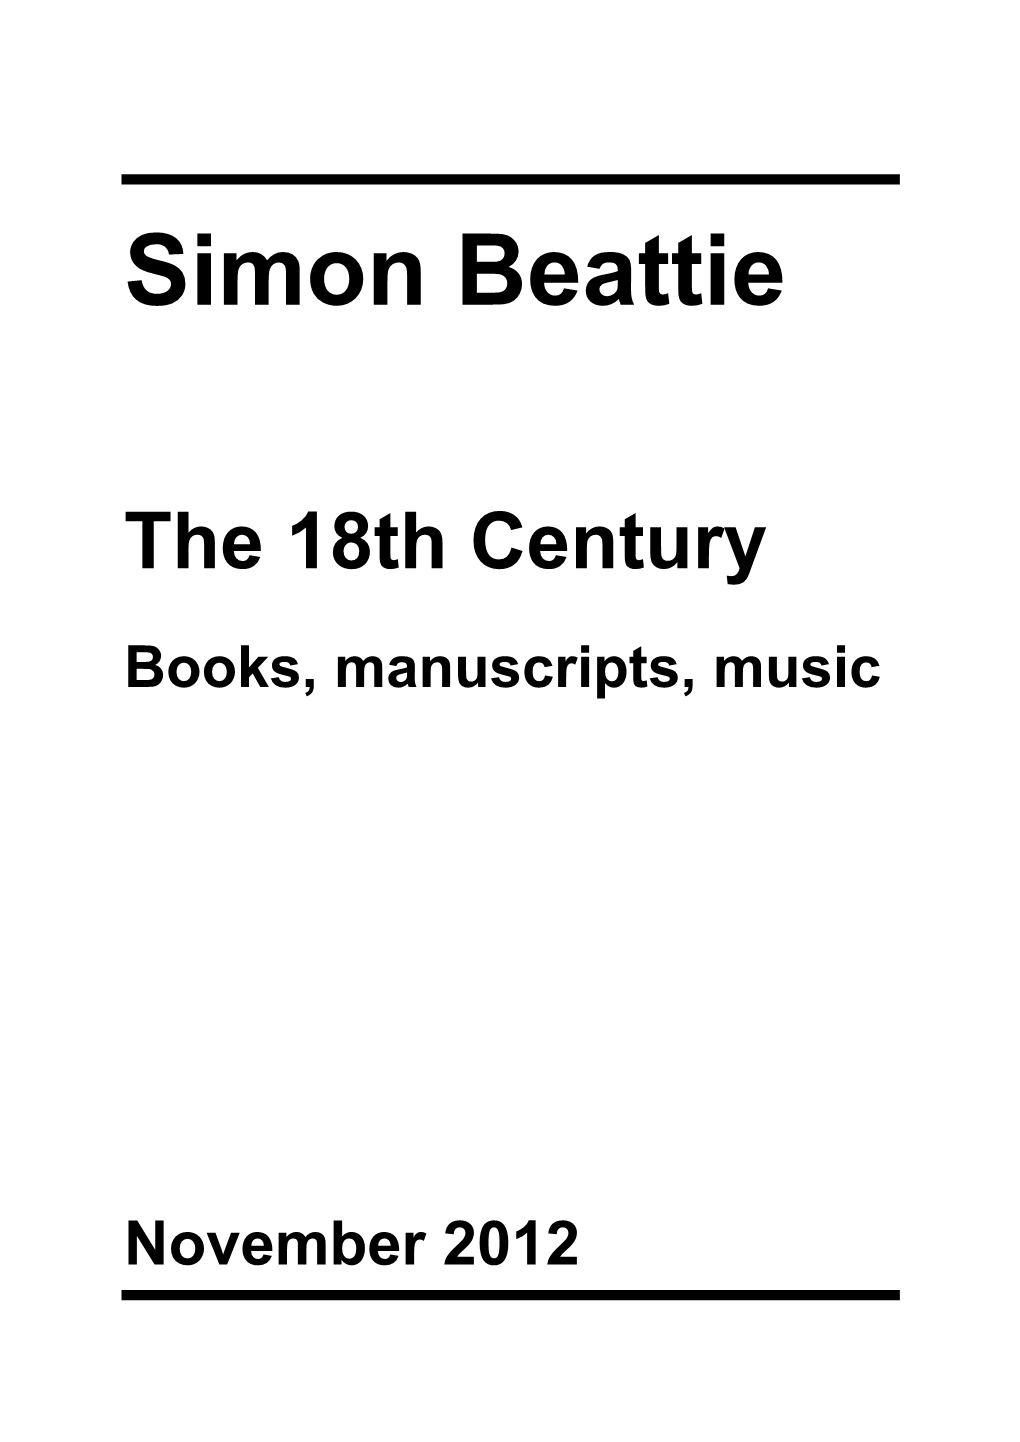 Simon Beattie